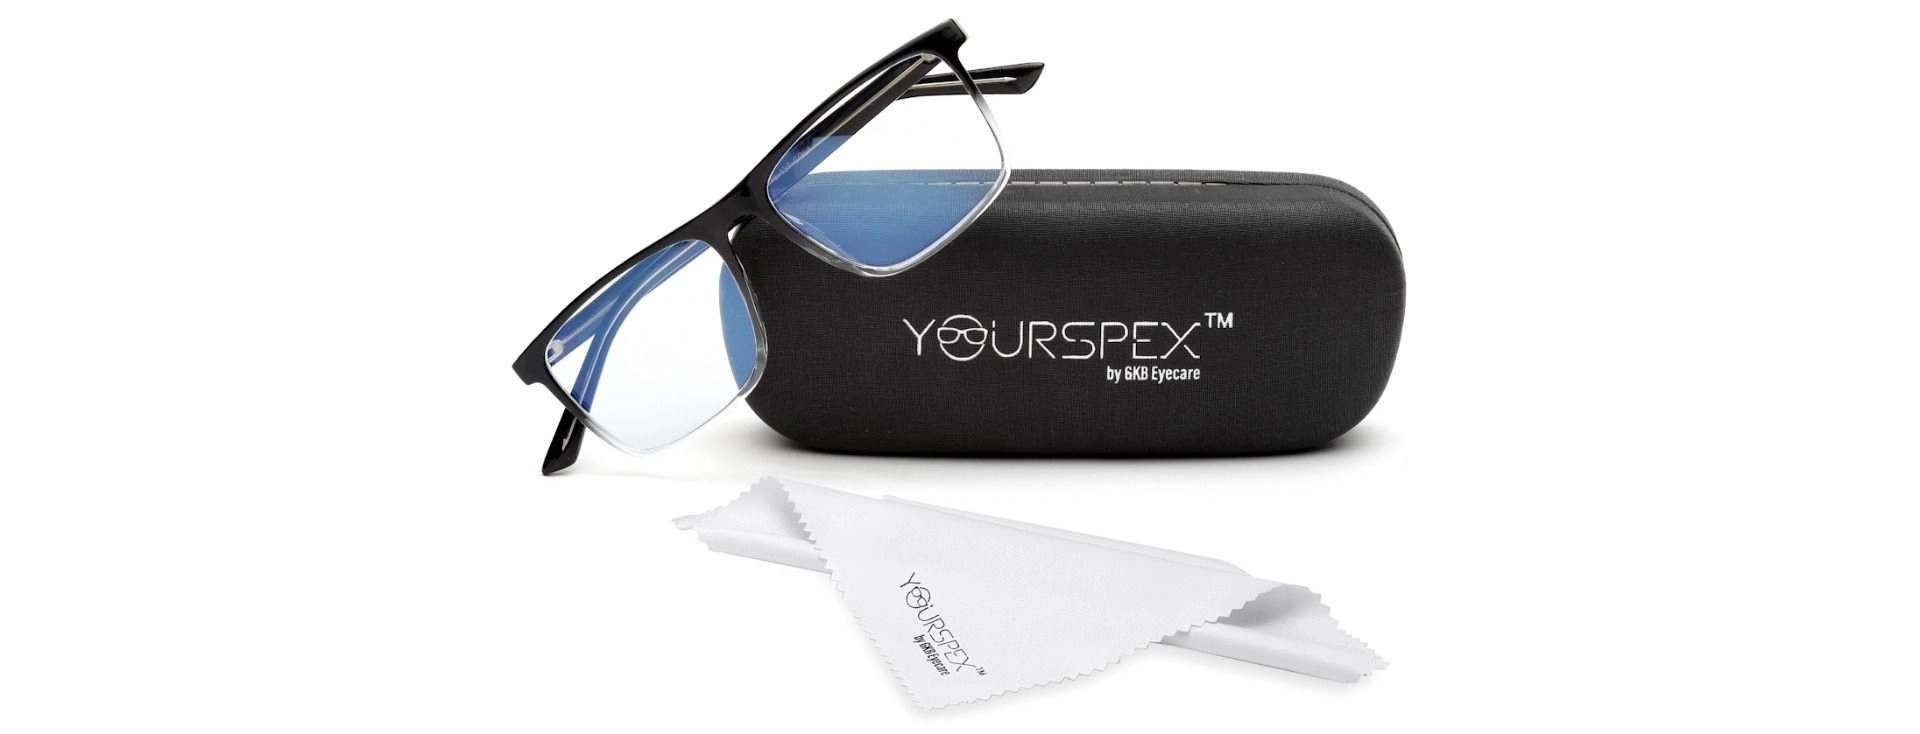 Gradient Black and Transparent Square Eyeglasses for Men